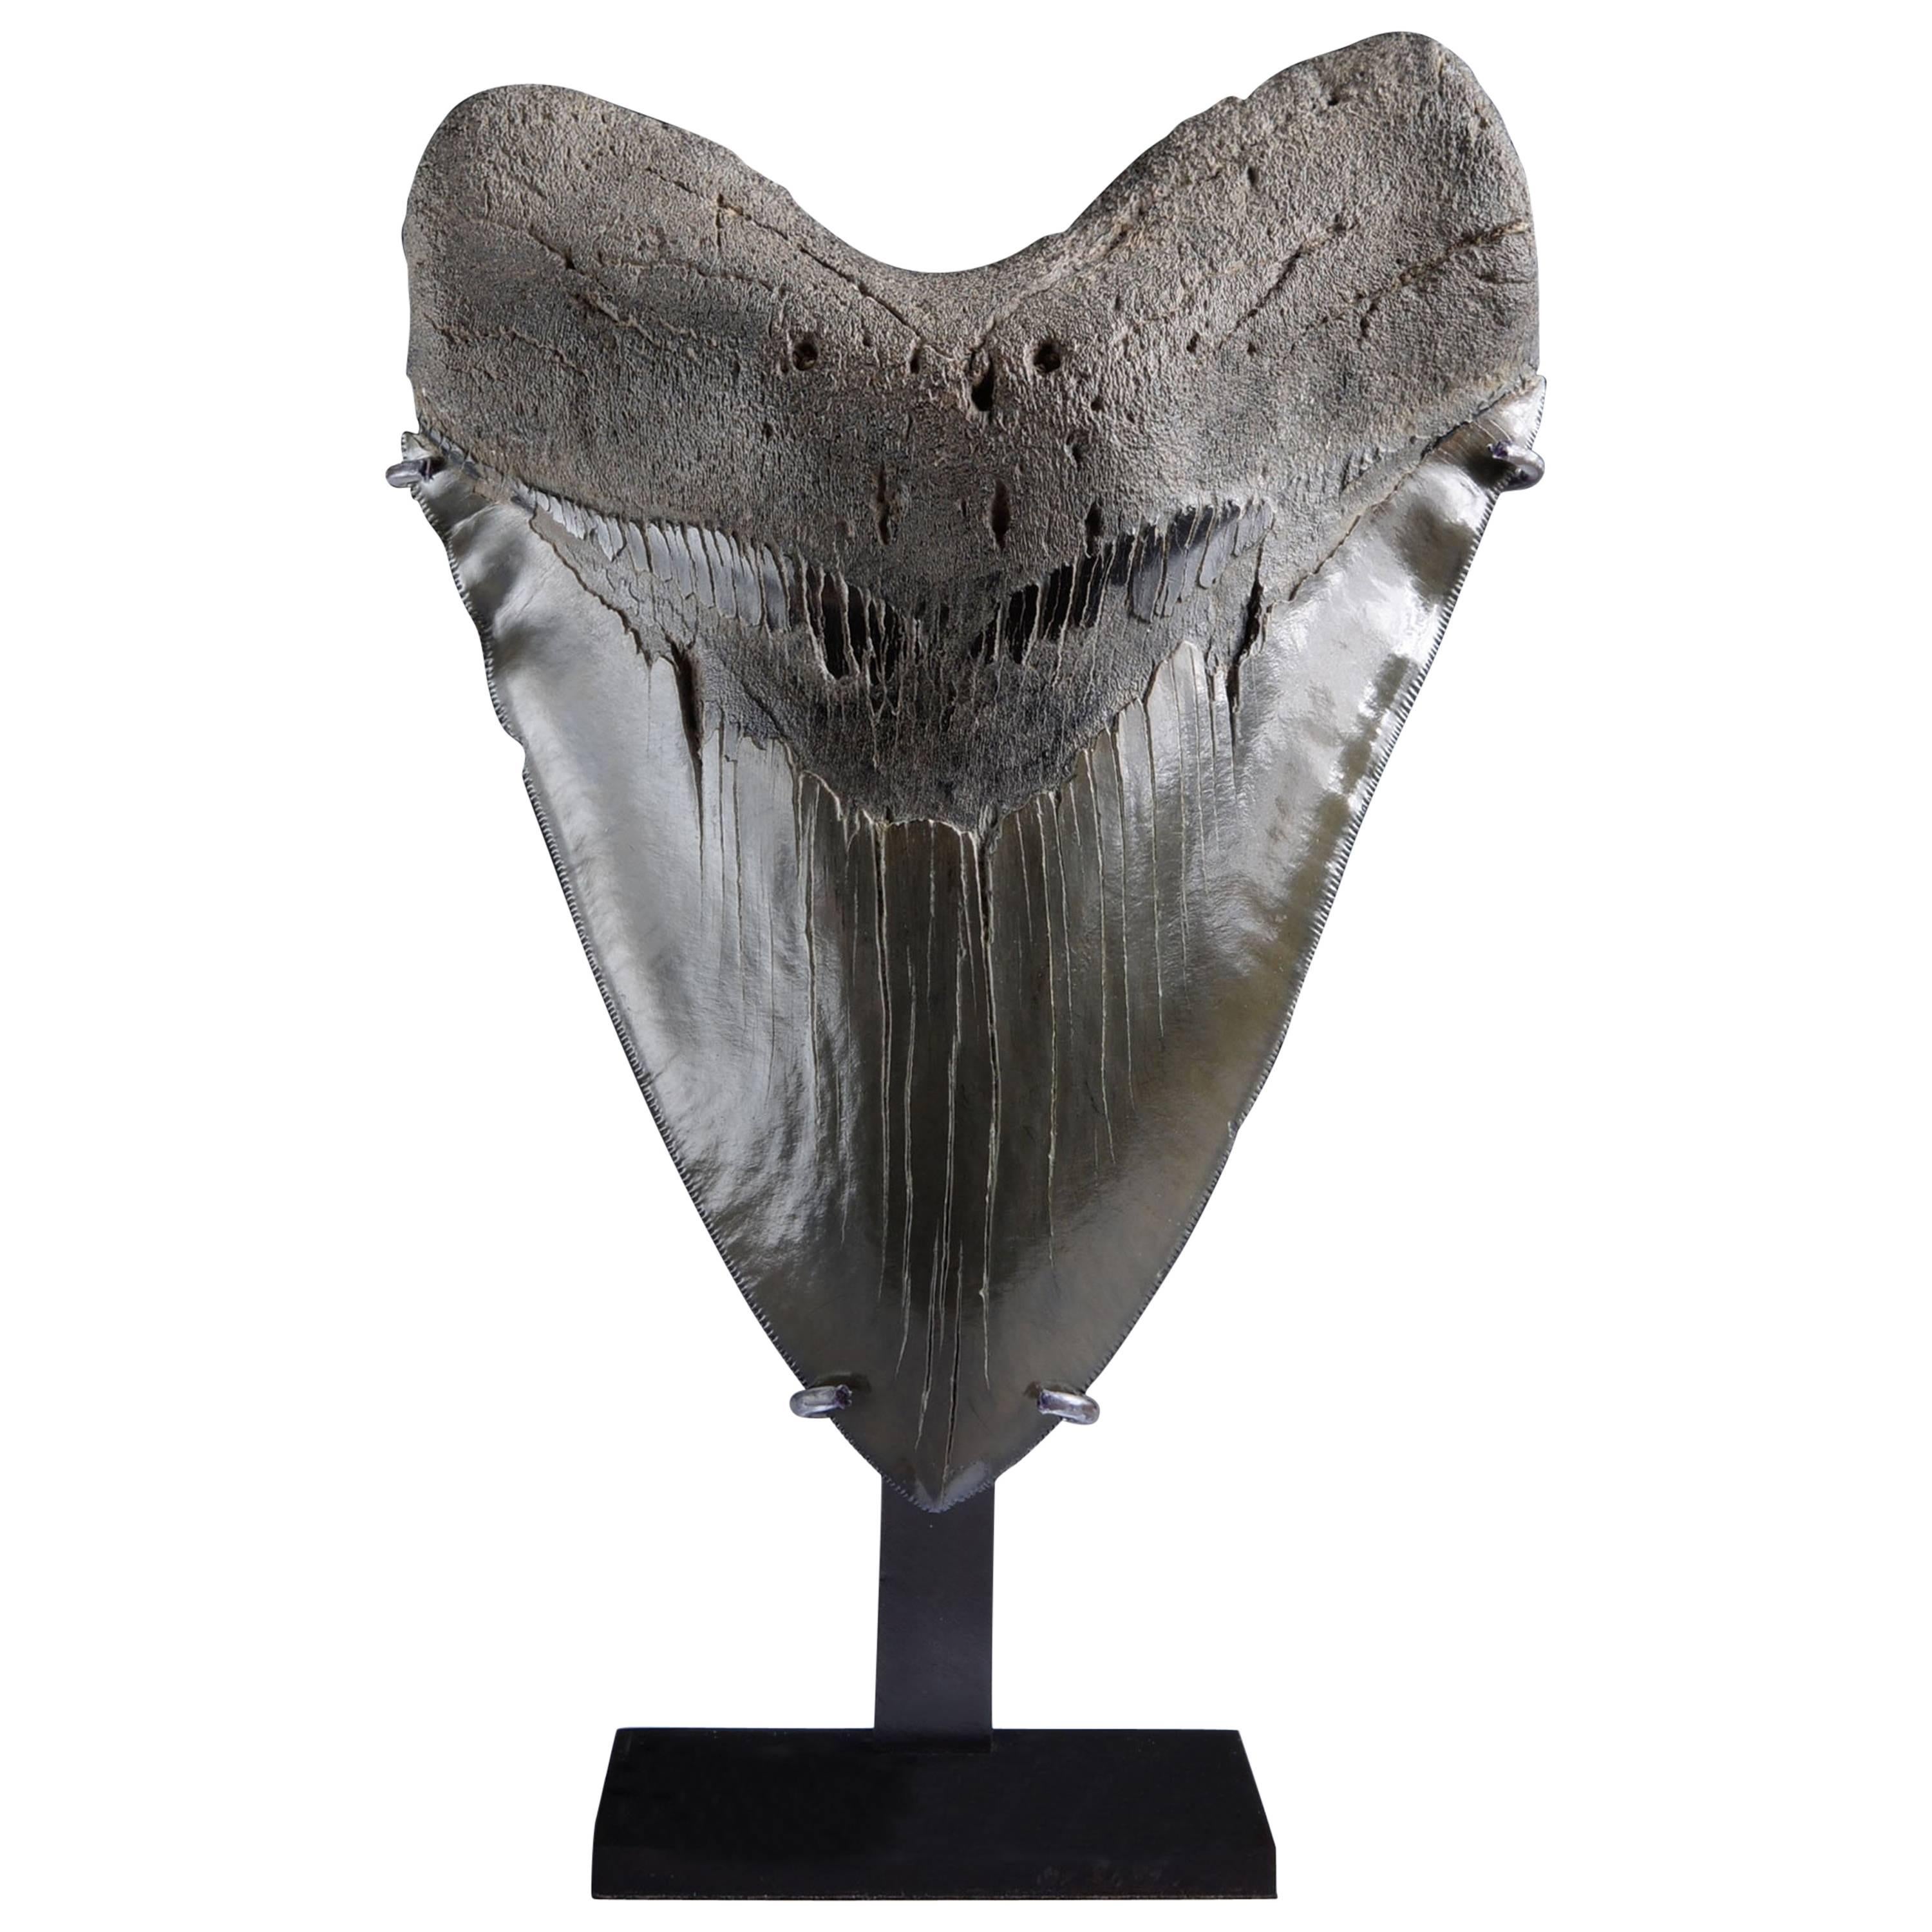 Huge Prehistoric Megalodon Shark Tooth Fossil